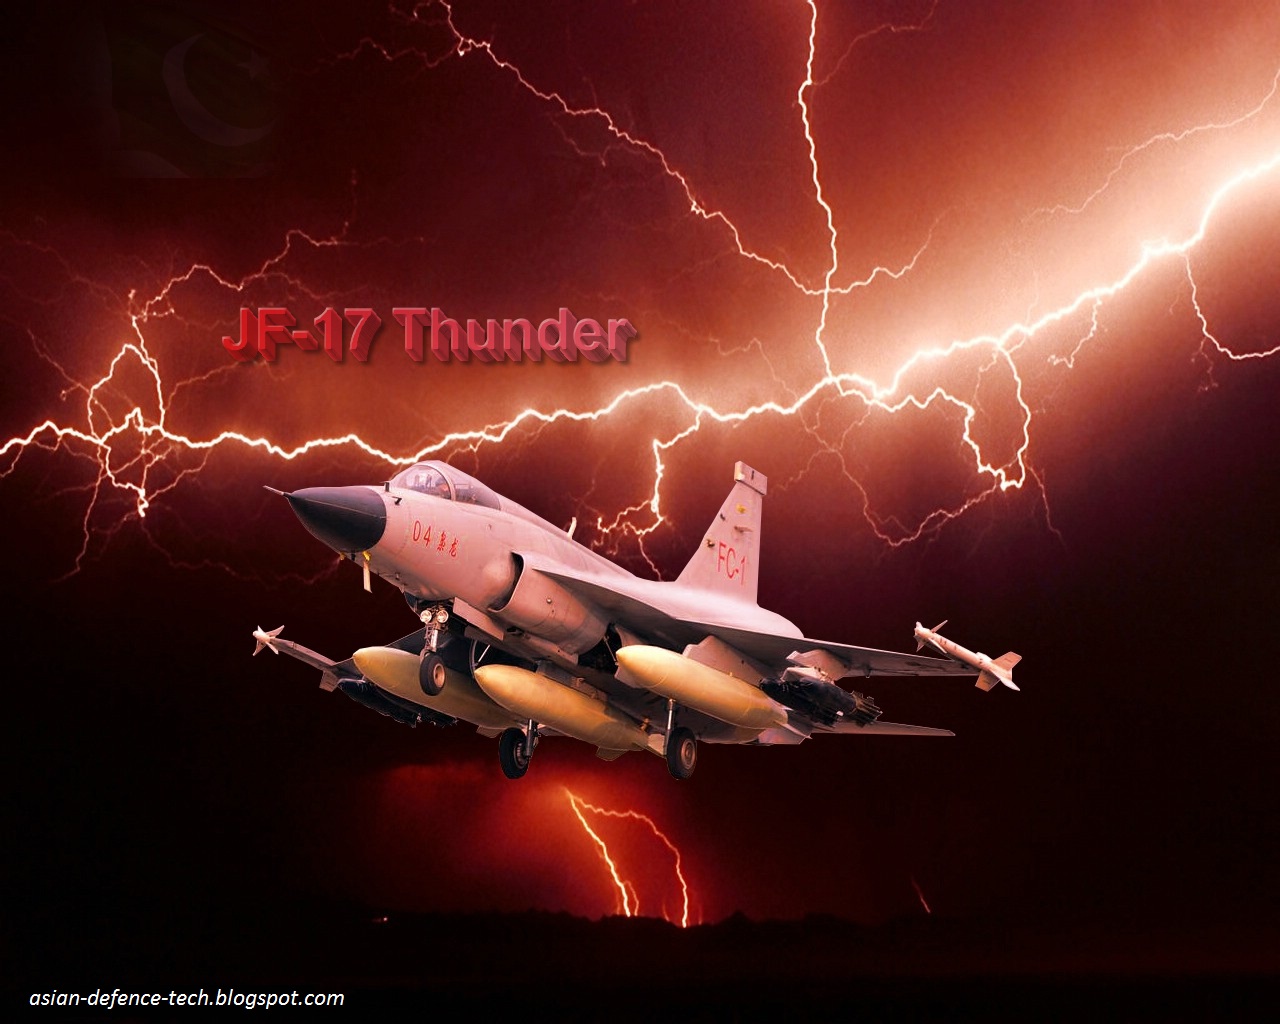 http://4.bp.blogspot.com/-WArnX7_hJsI/Ttx8sMU_1WI/AAAAAAAACnY/gB7sMsliMiM/s1600/asian+defence+jf-17+thunder.jpg